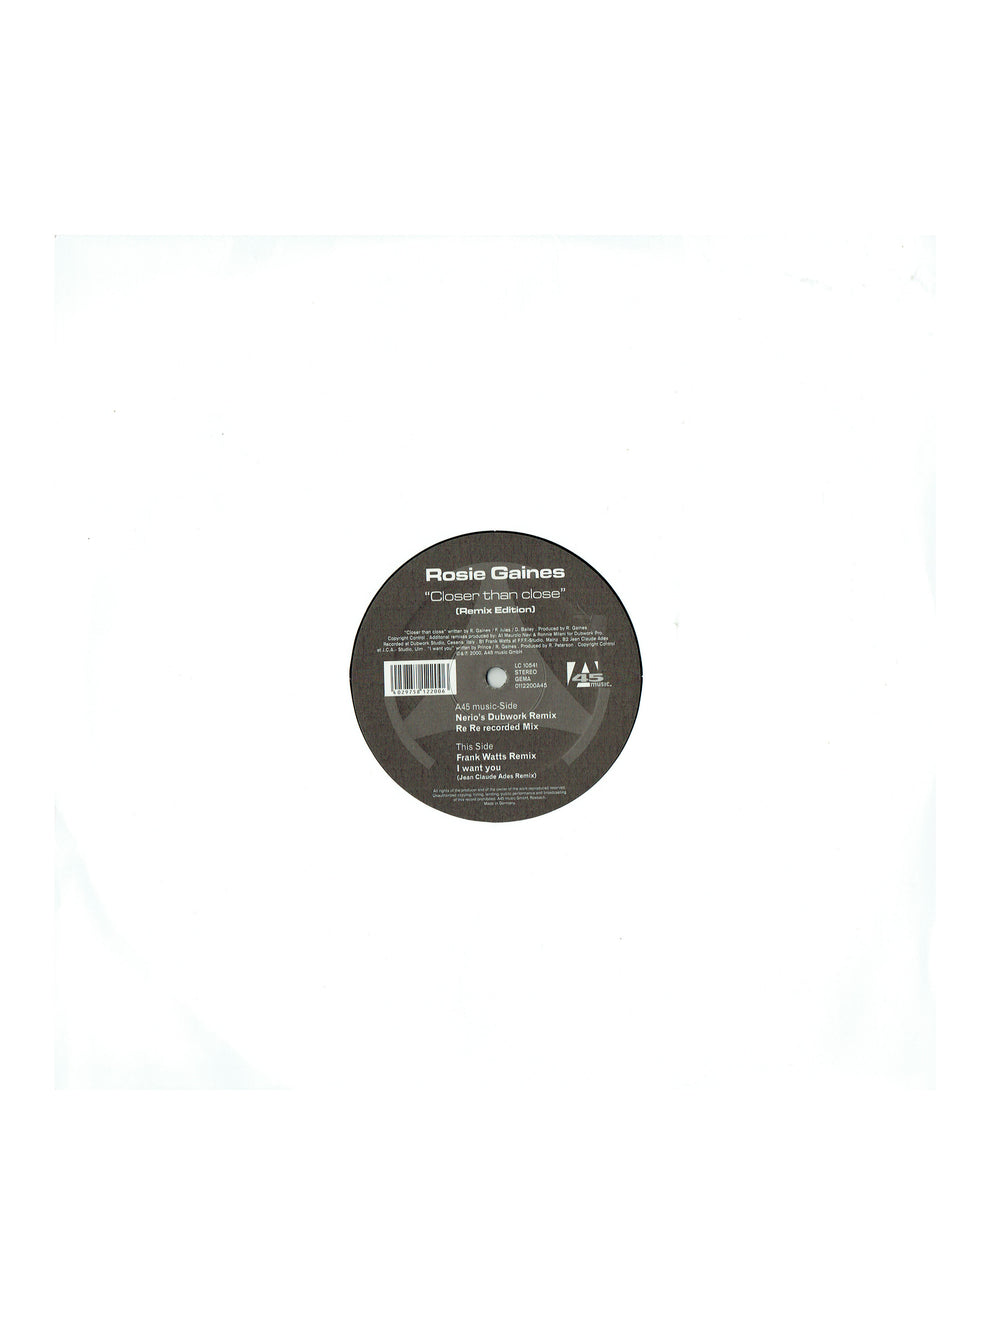 Rosie Gaines Closer Than Close Remix Edition 12 Inch Vinyl Prince